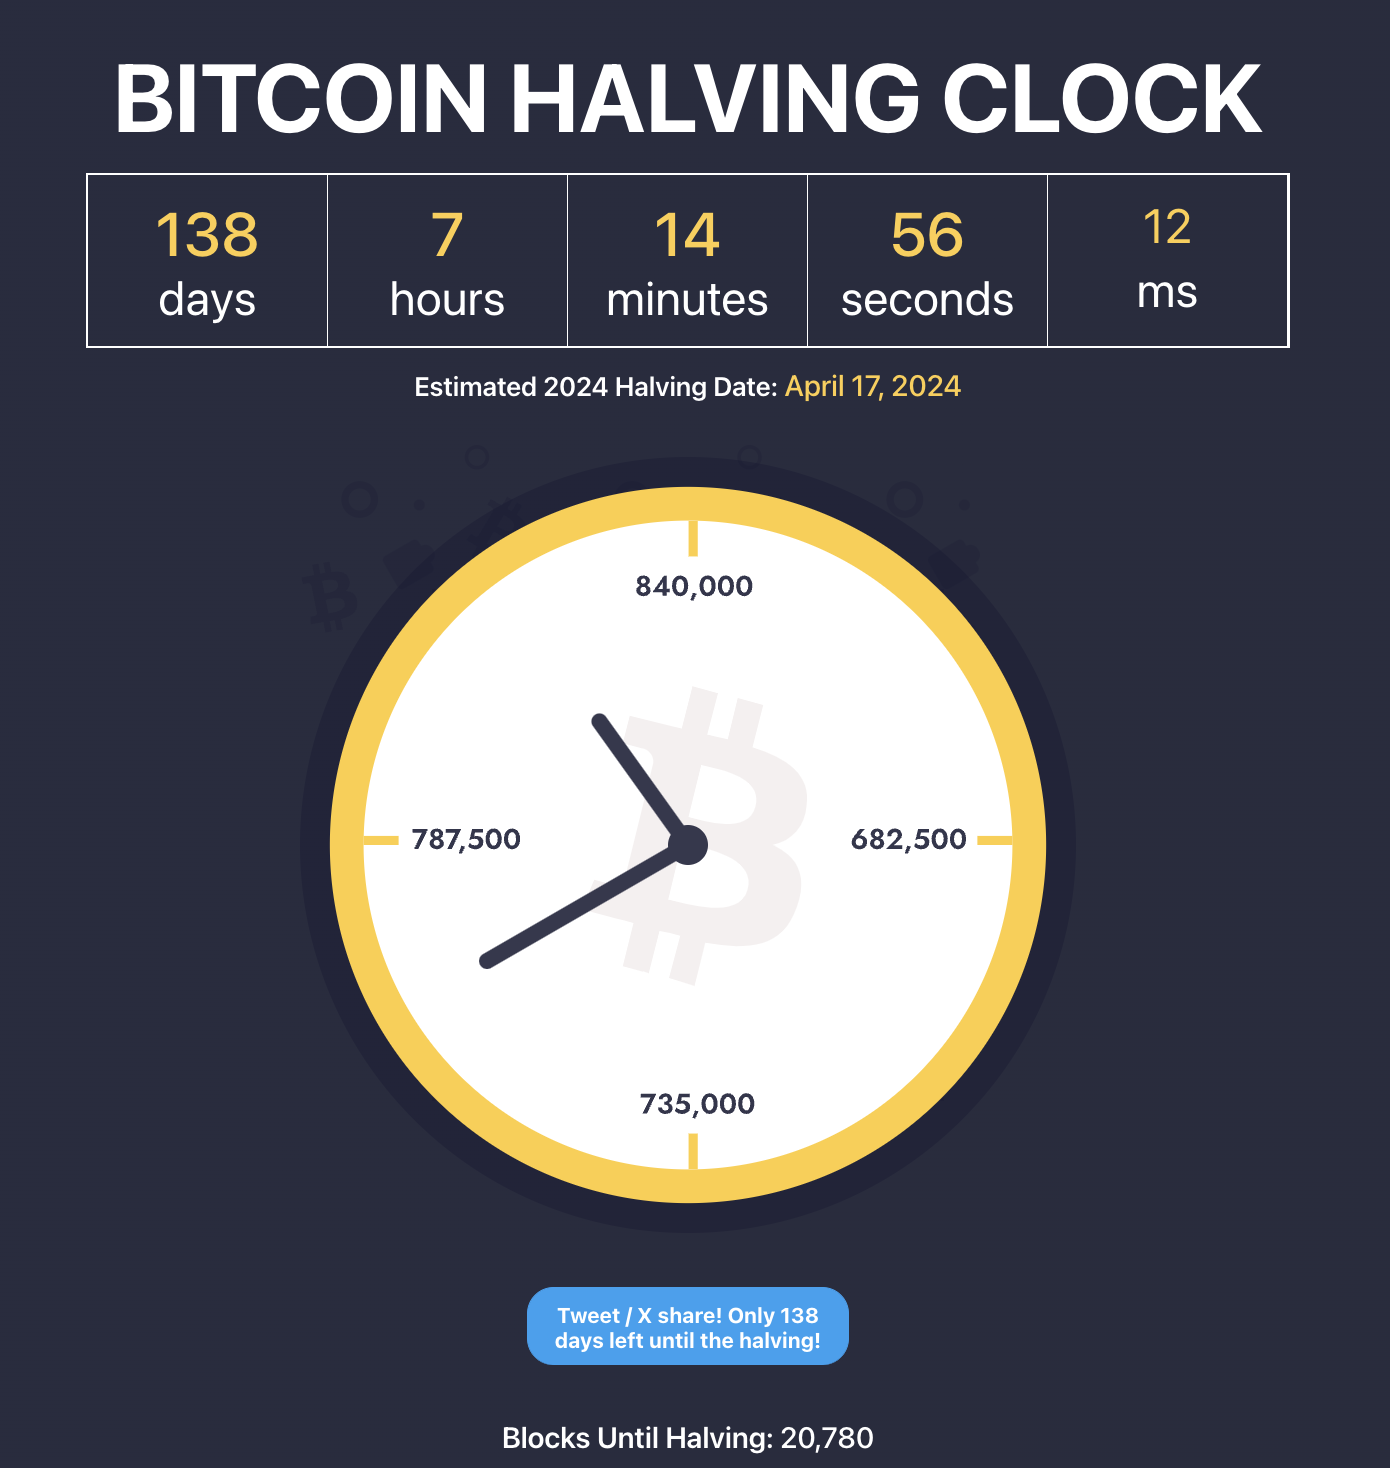 BTC halving clock